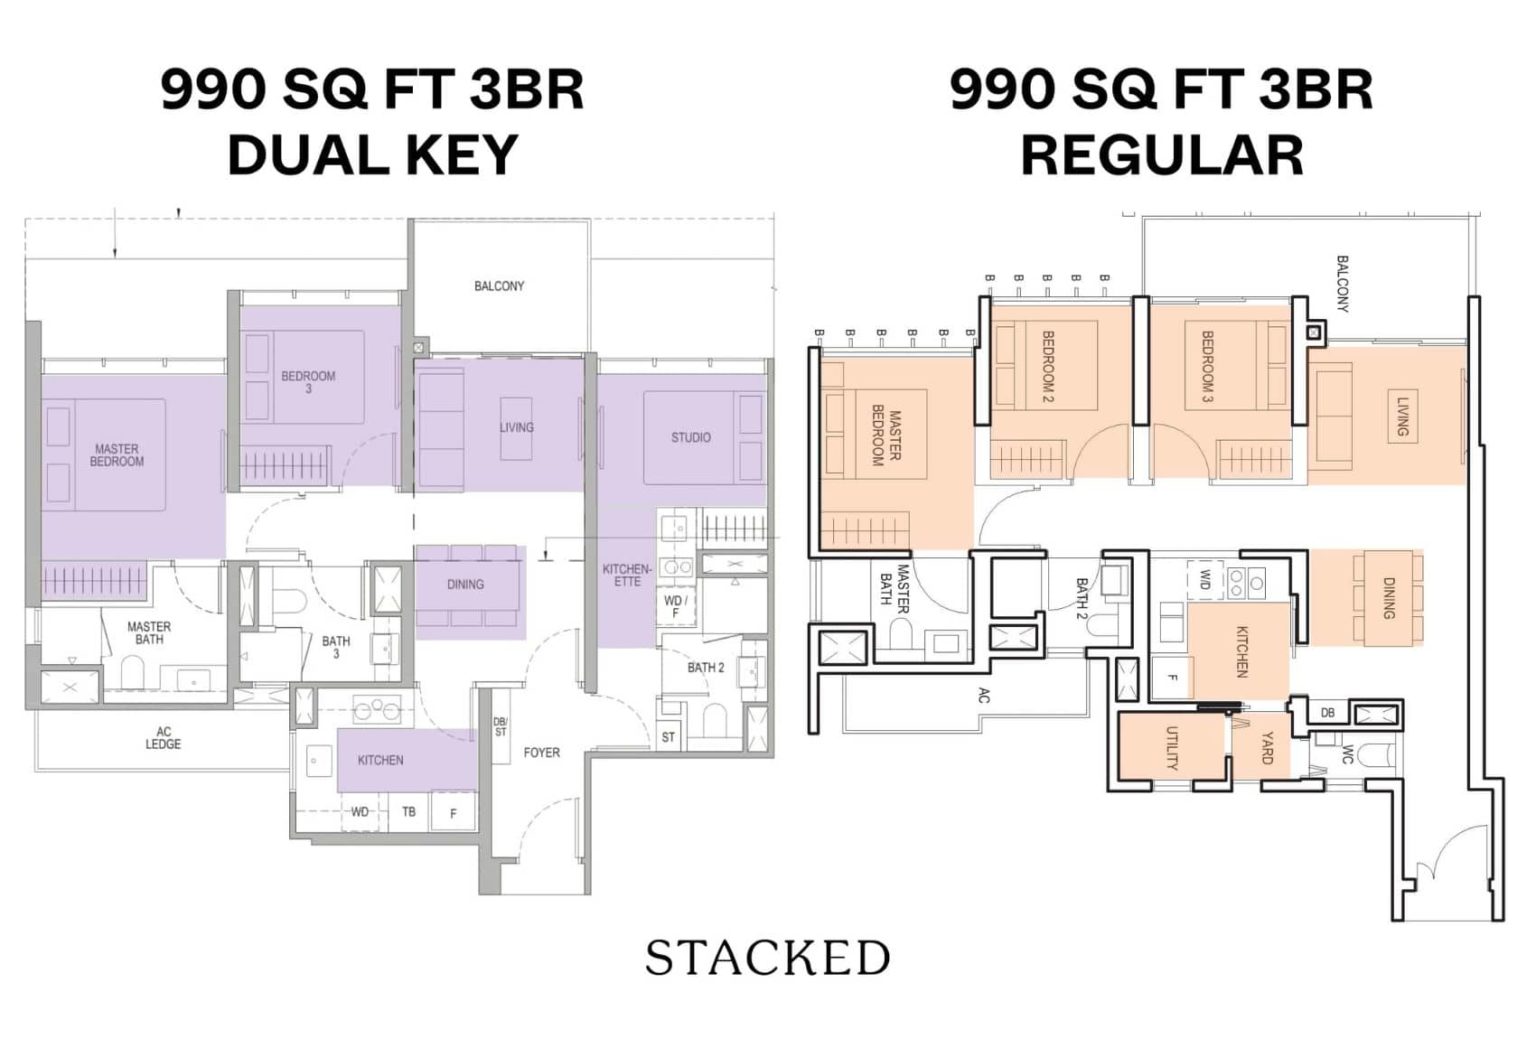 dual key vs regular unit layout singapore